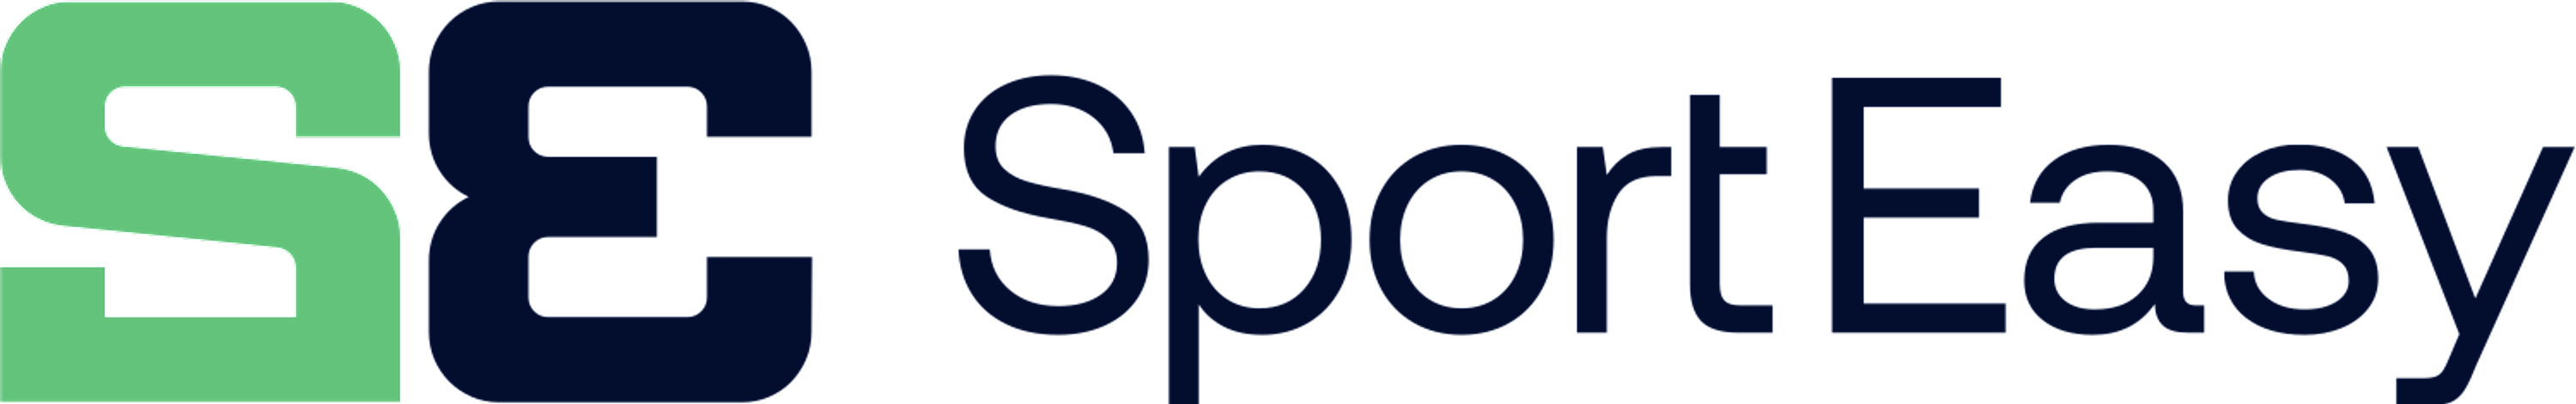 Logo SportEasy horizontal foncé